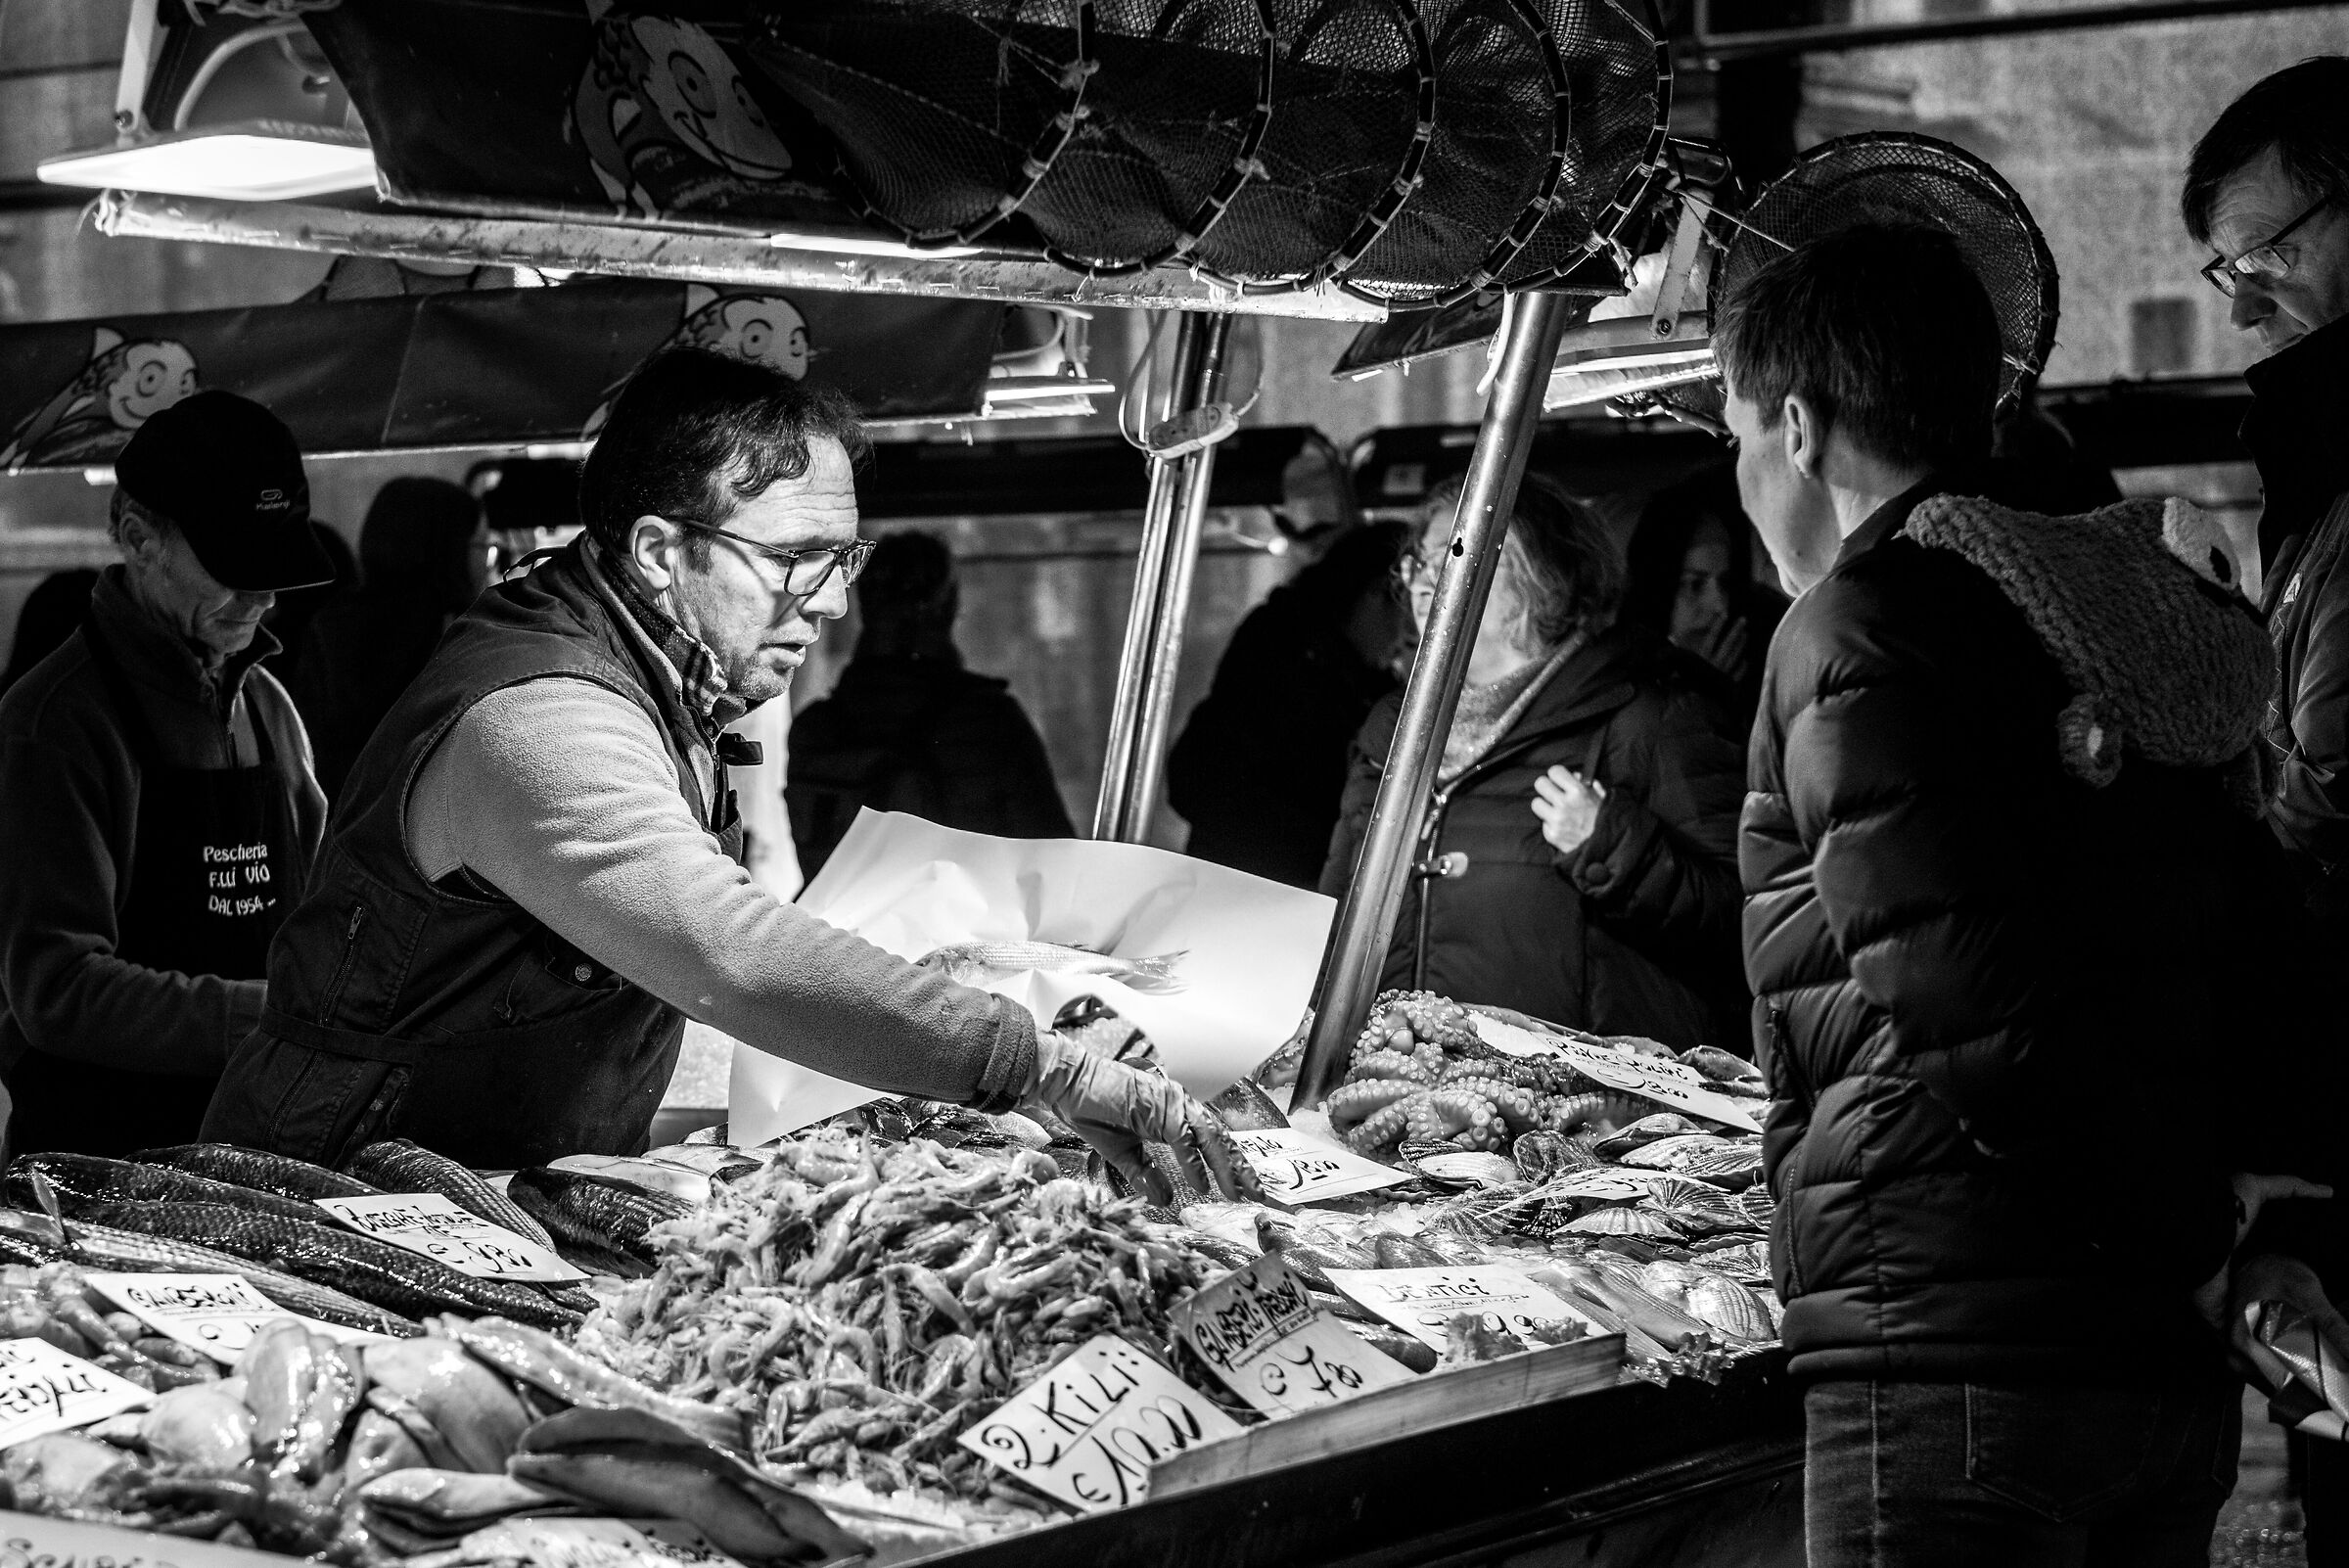 At the fish market, Venice...